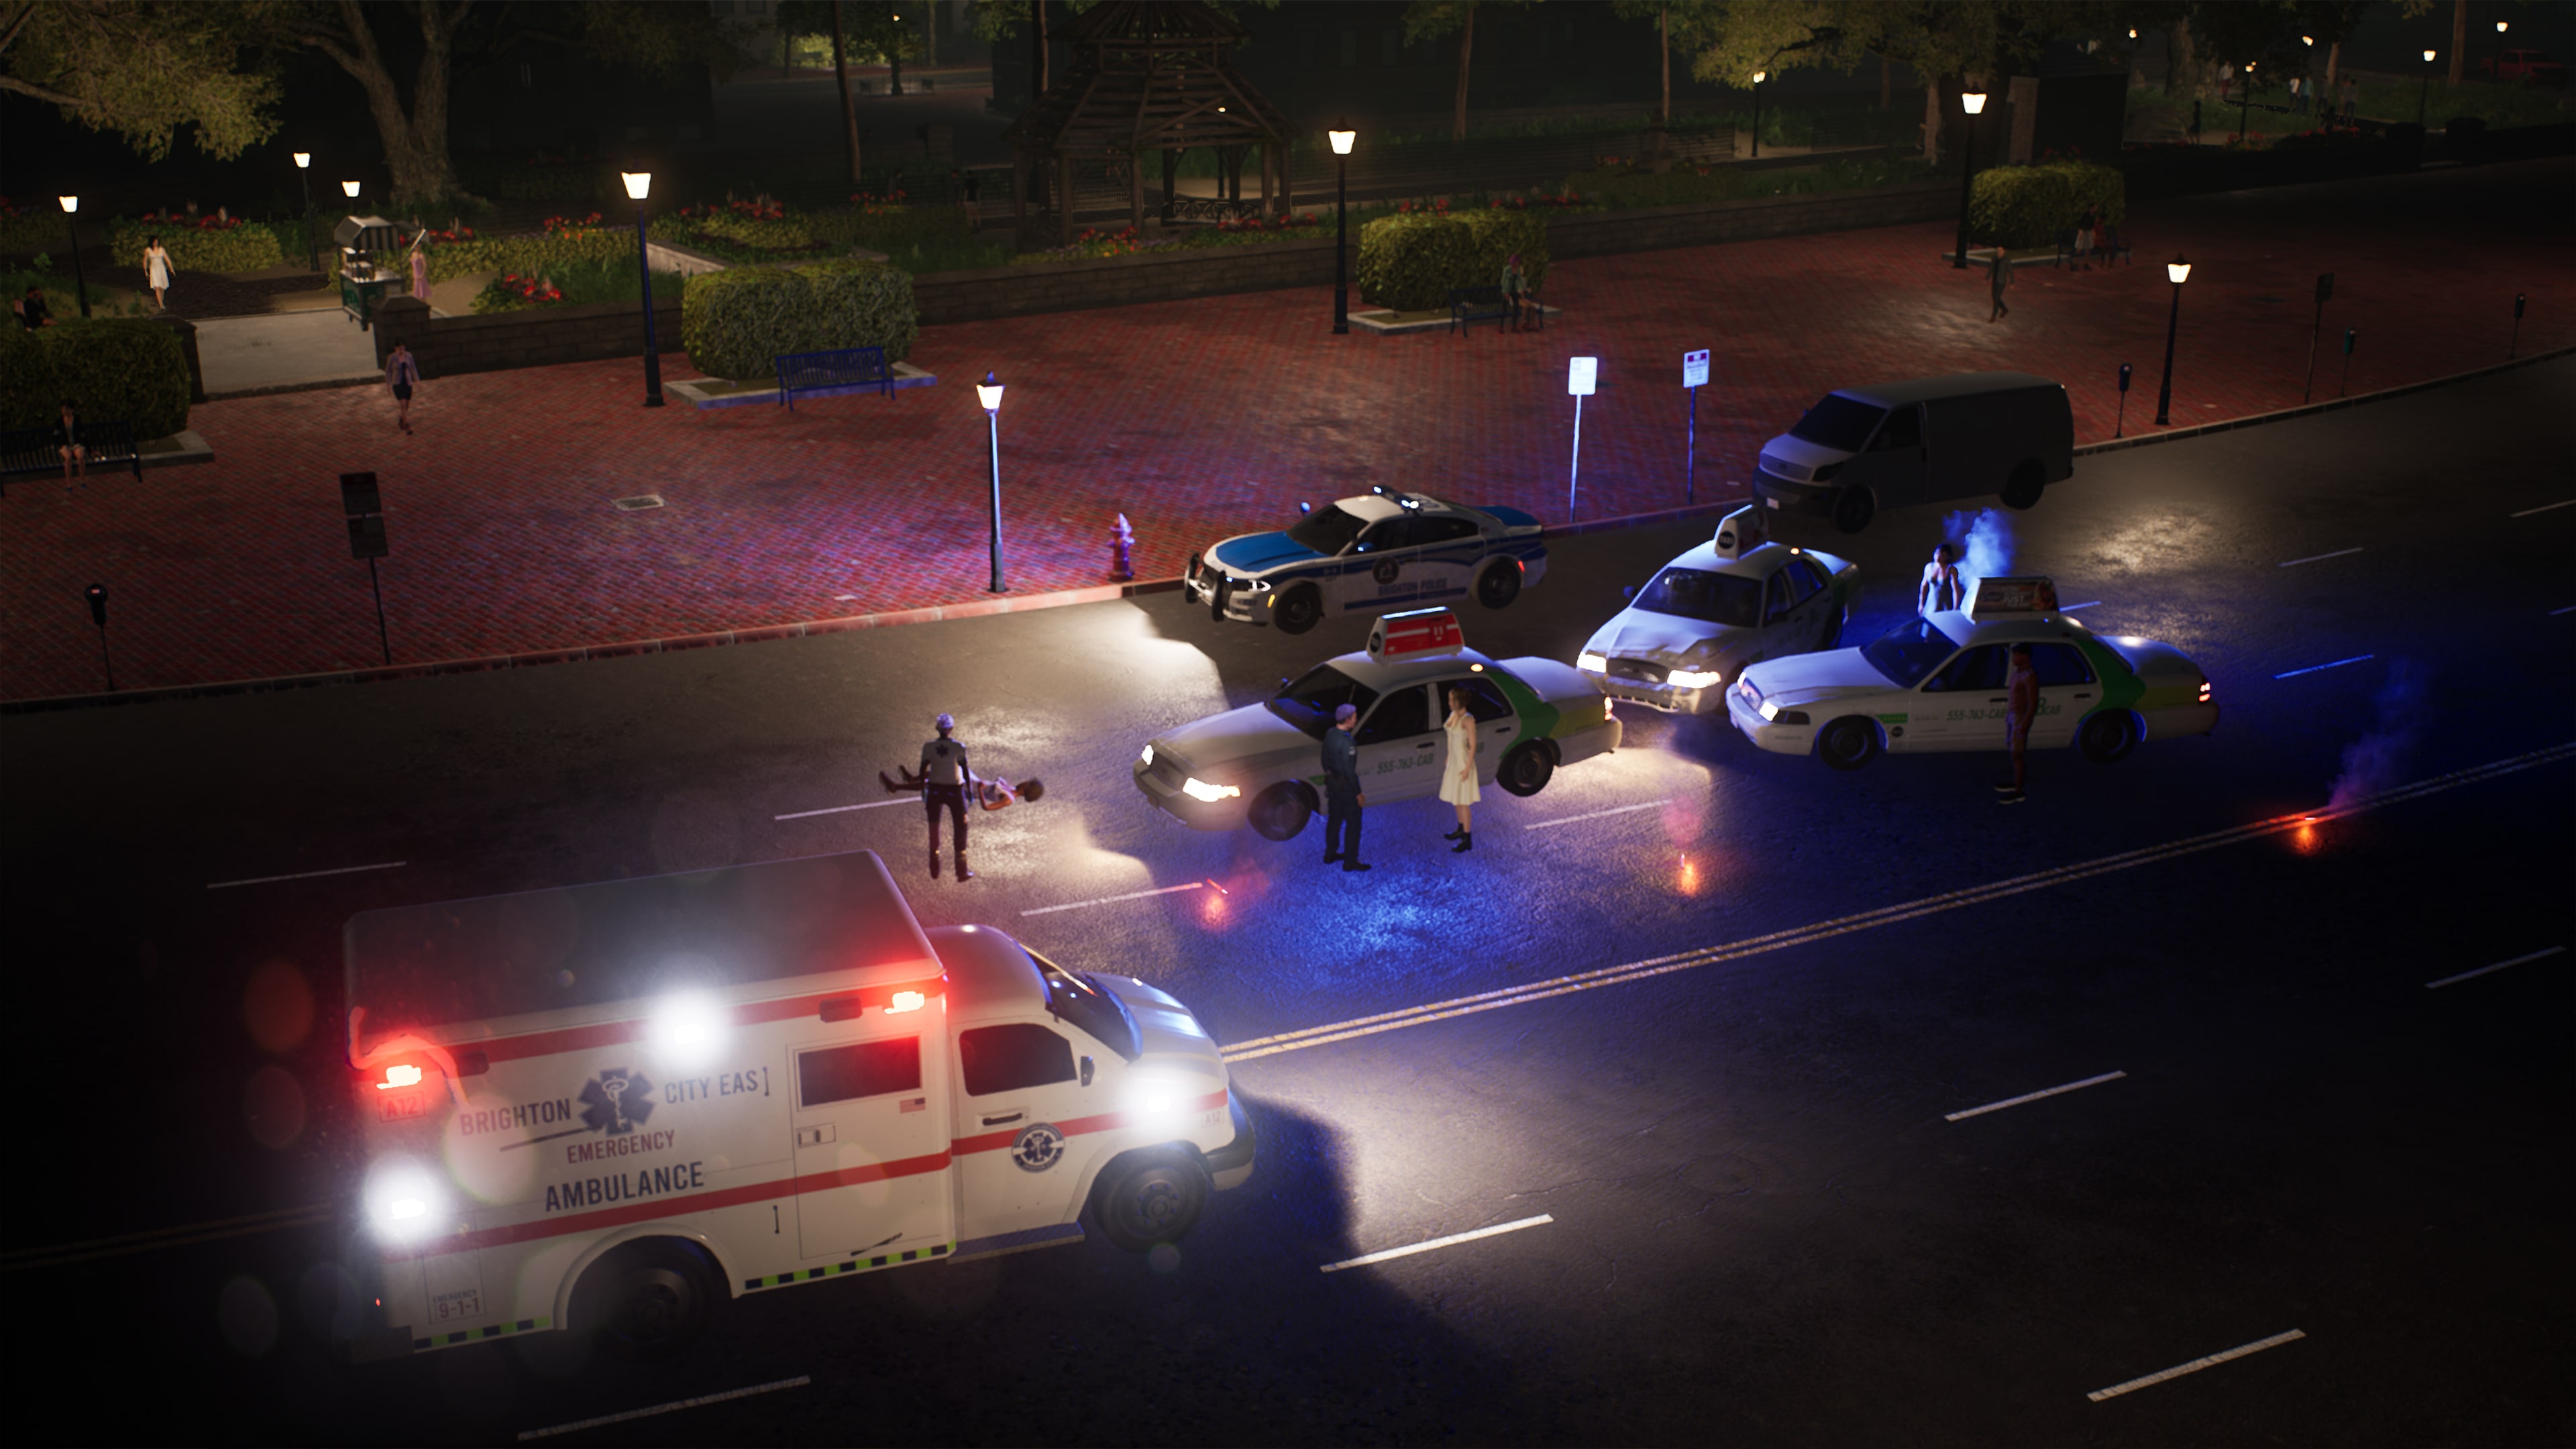 Police Simulator Patrol Officers (EU) Price on PlayStation 4